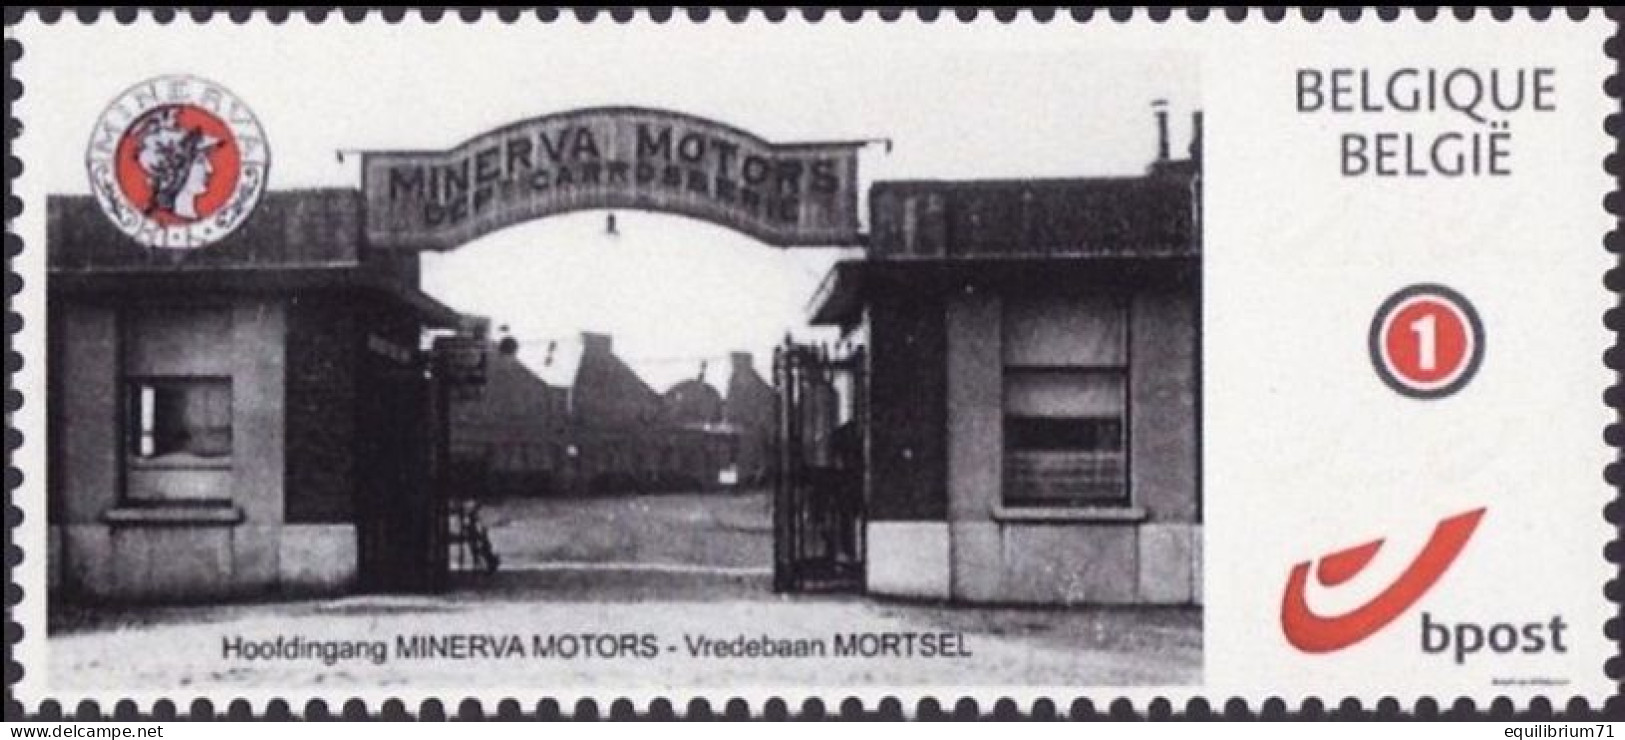 DUOSTAMP** / MYSTAMP** - Entrée De La Fabrique Minerva / Ingangspoort Minerva-fabriek - Mortsel (1924) - Mint